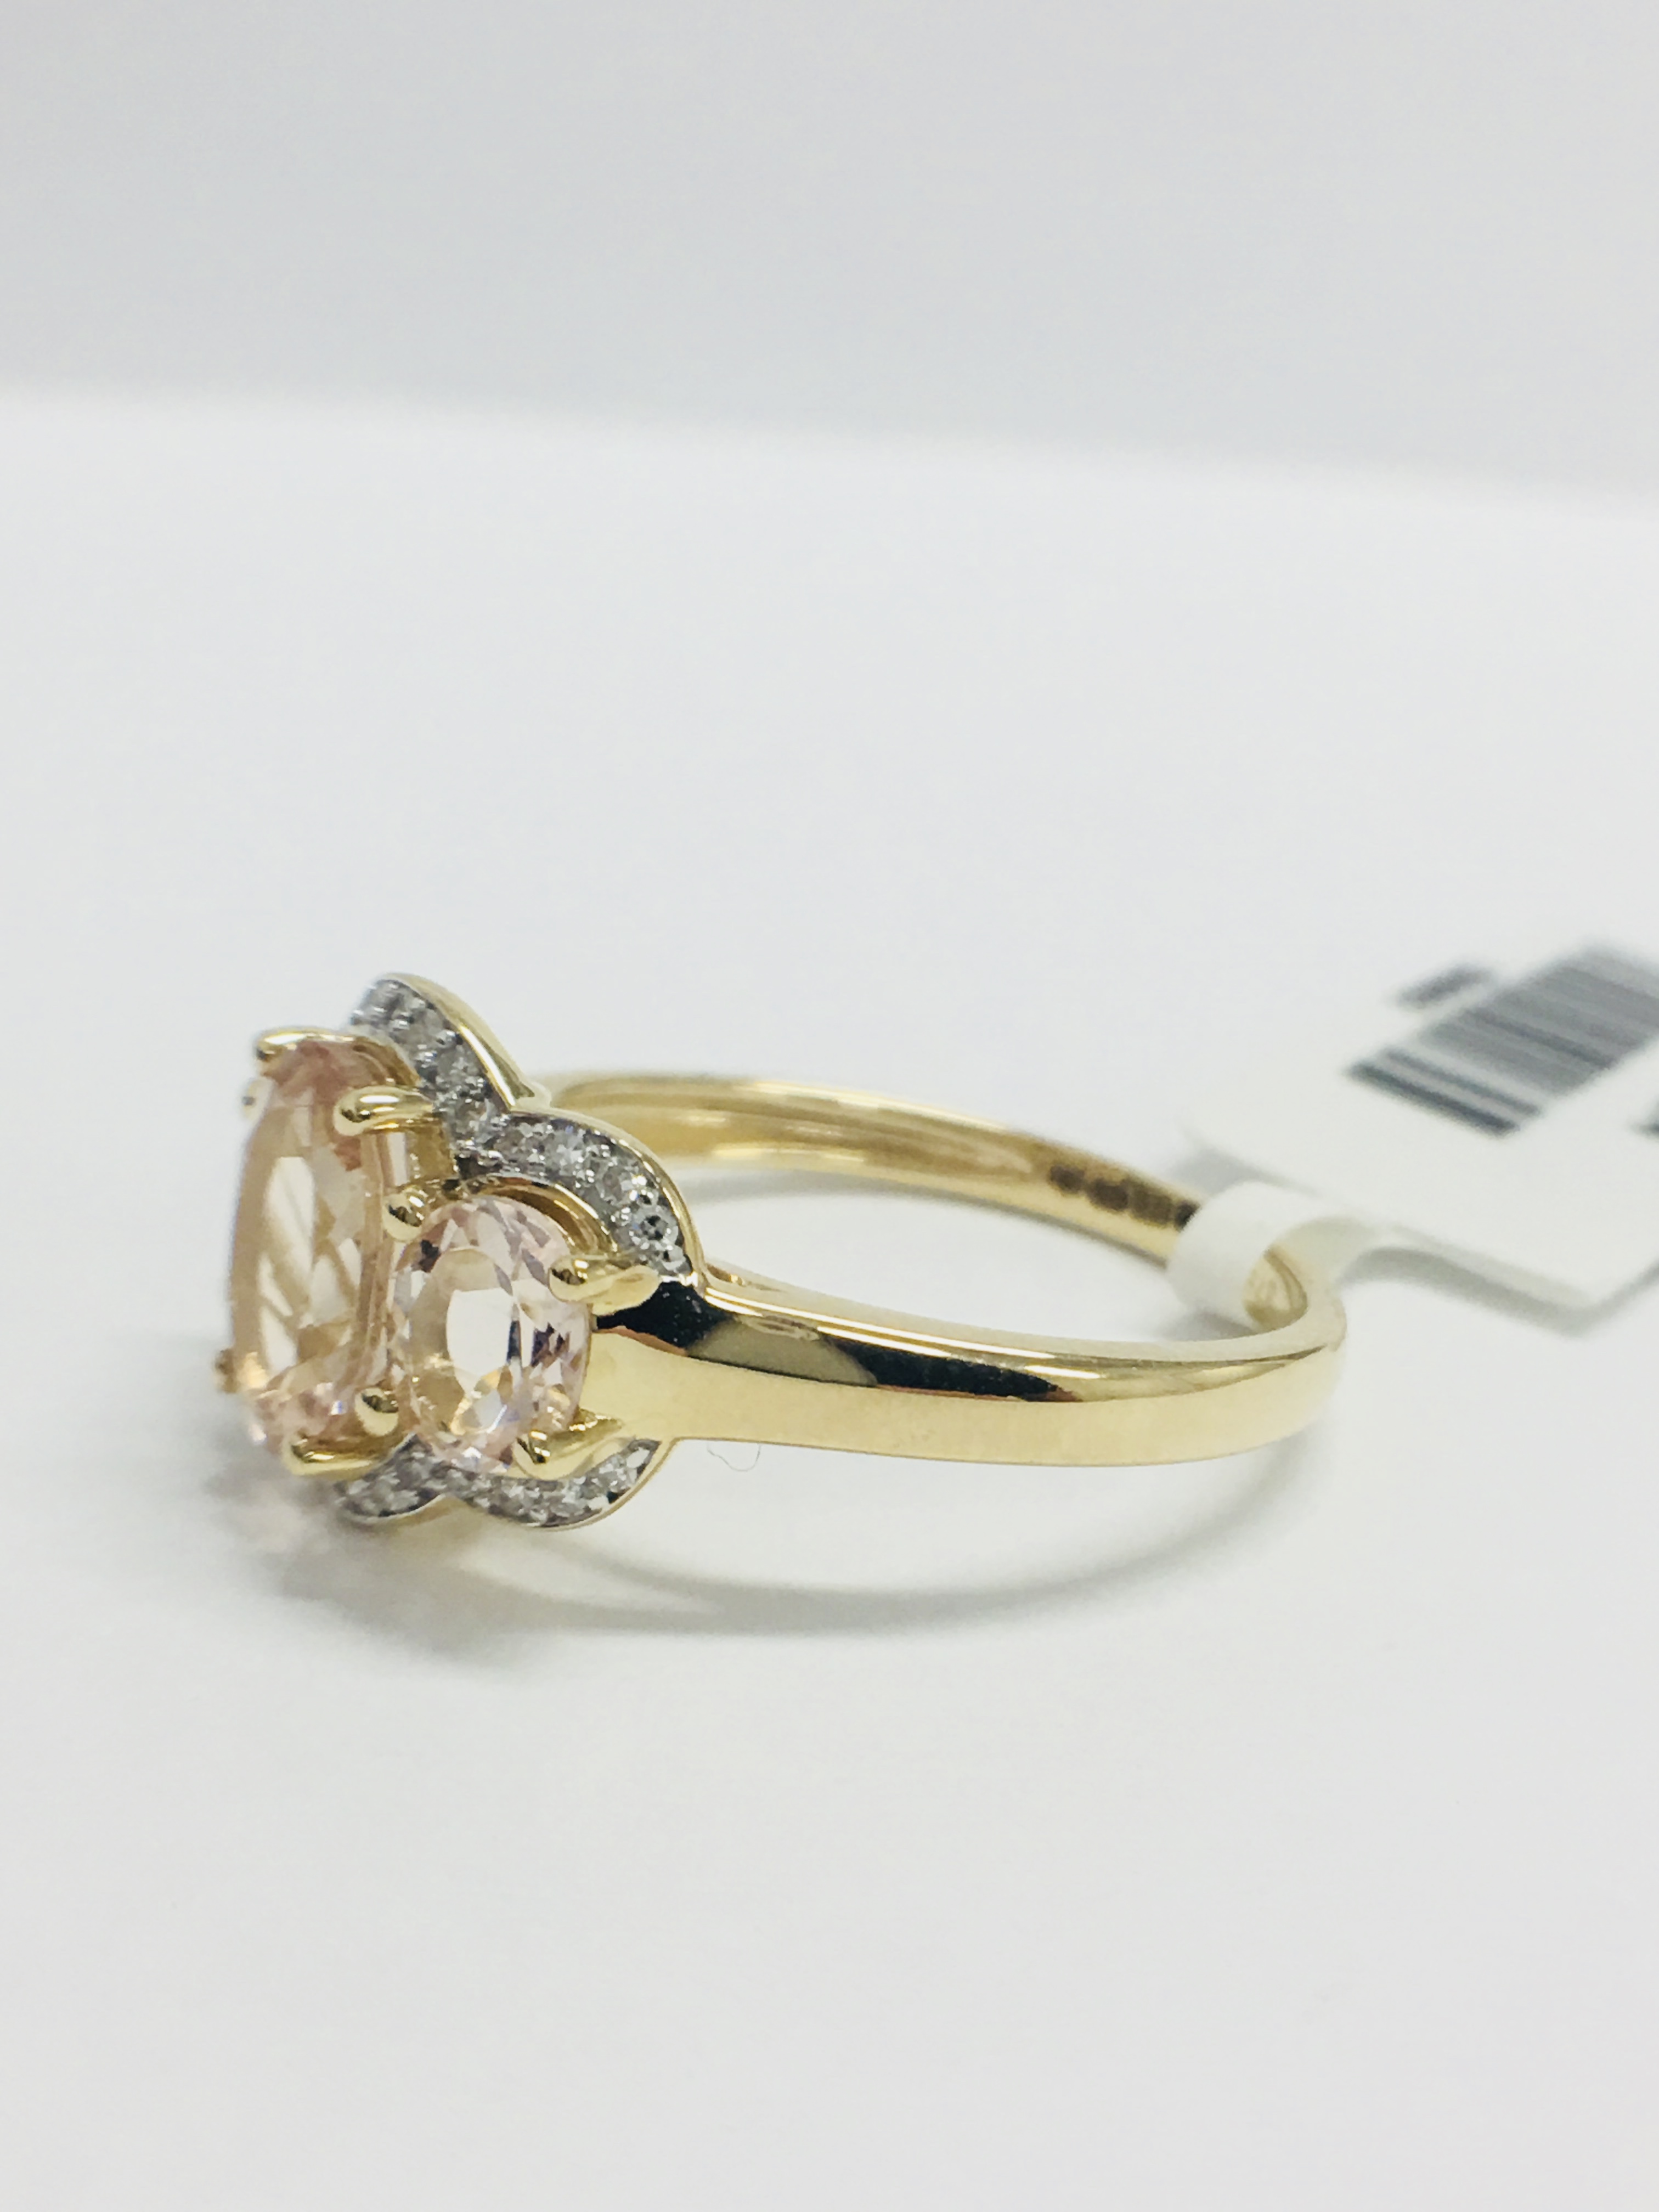 9ct yellow gold morganite and diamond ring - Image 5 of 11